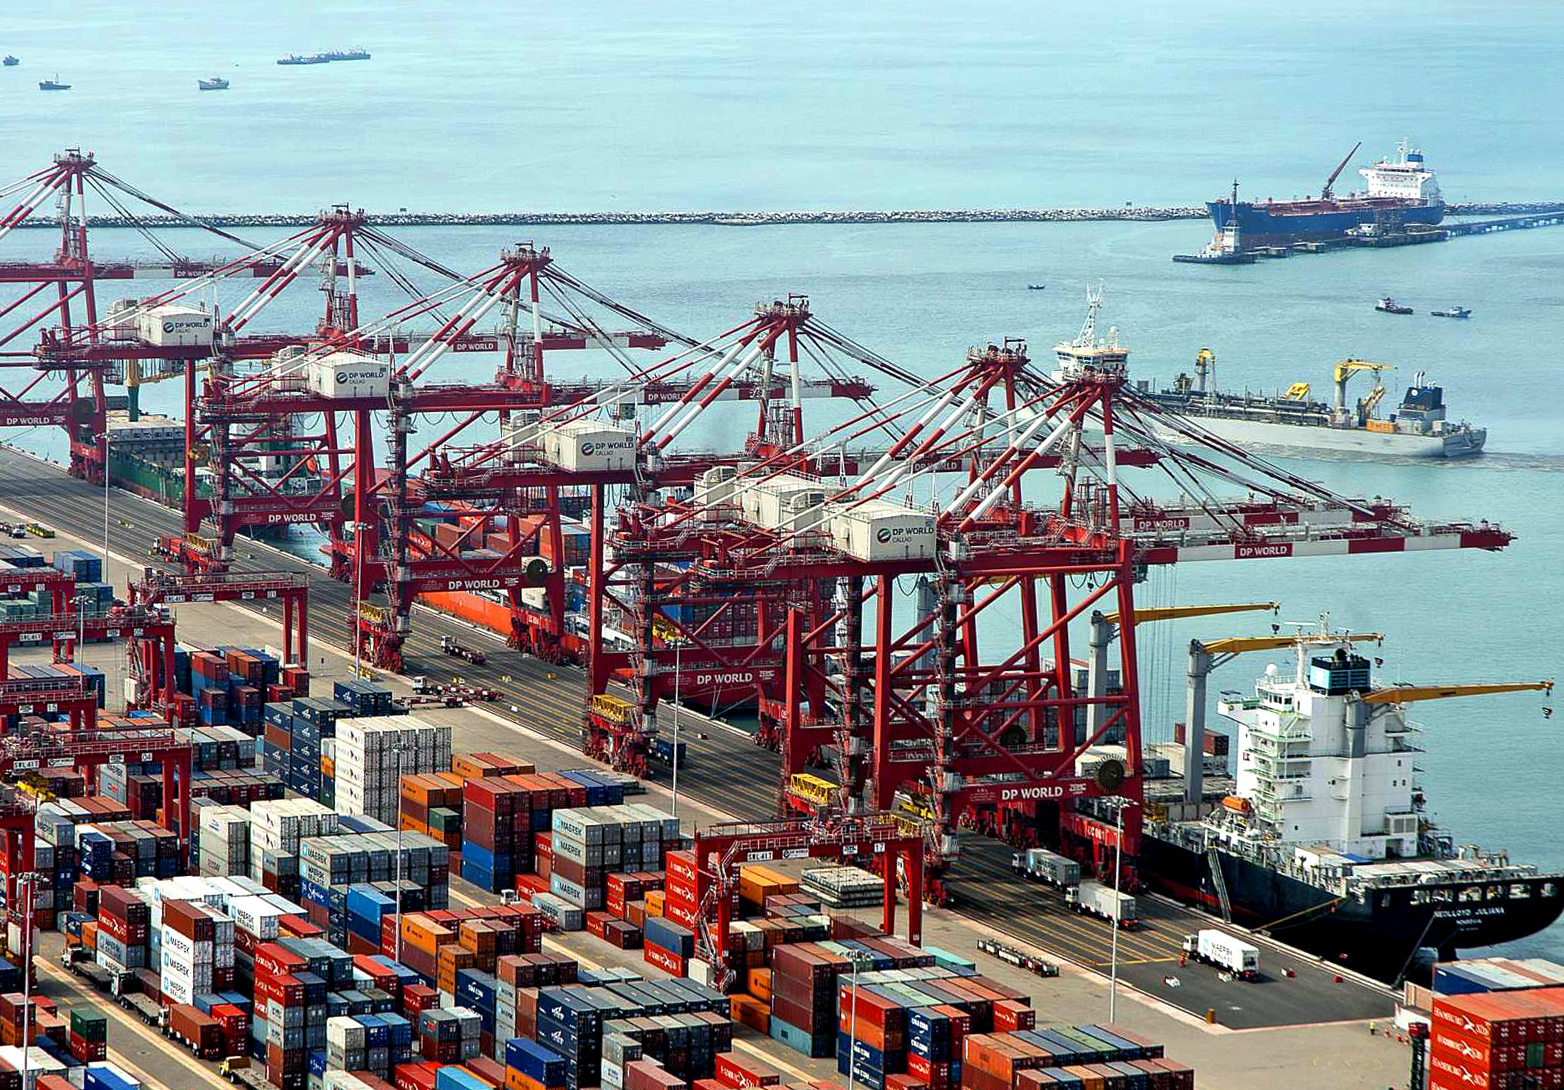 DP World, Mawani ink partnership deal for Jeddah logistics park - Container News